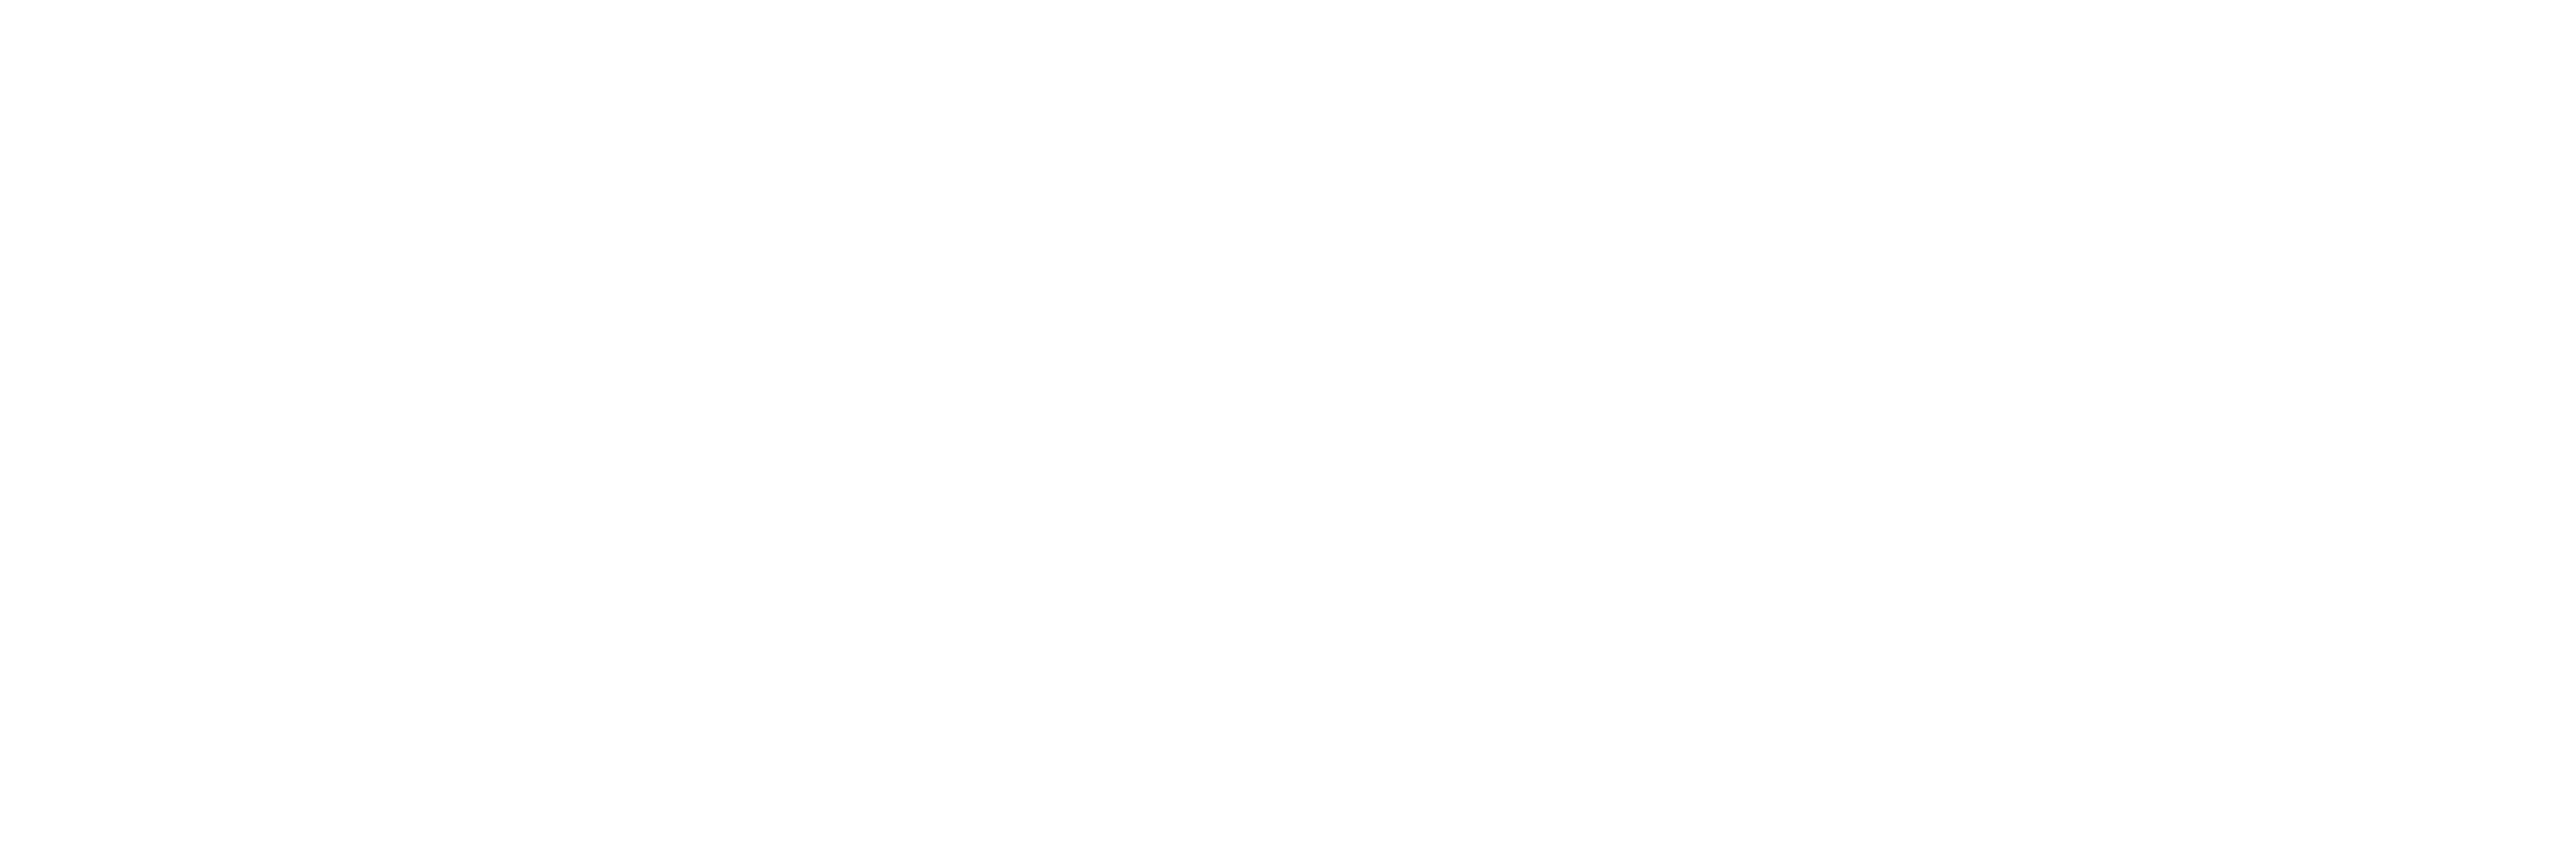 keyclusters logo white